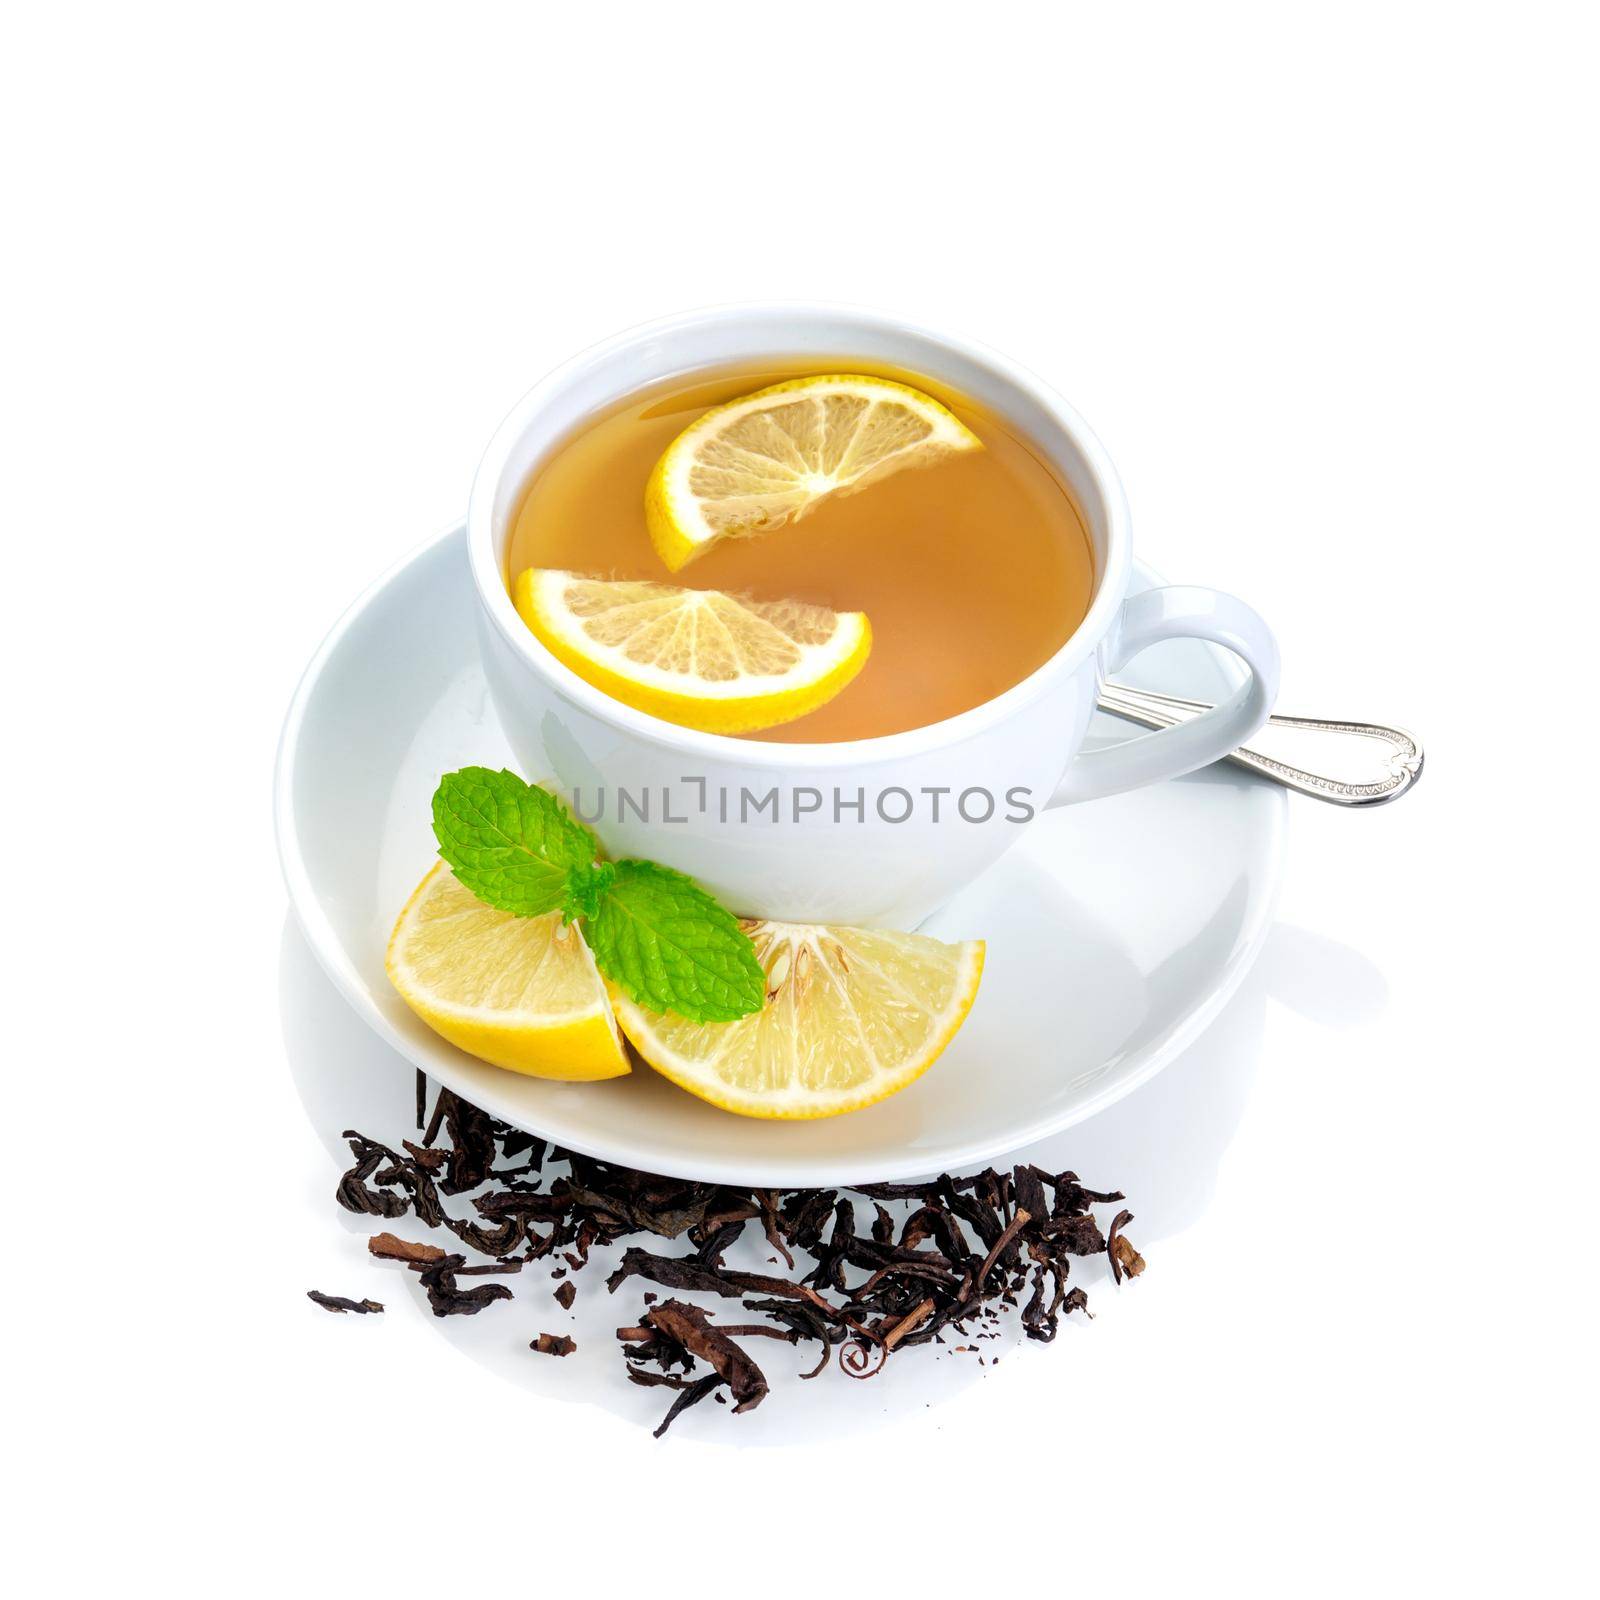 a cup of lemon tea with sliced lemon